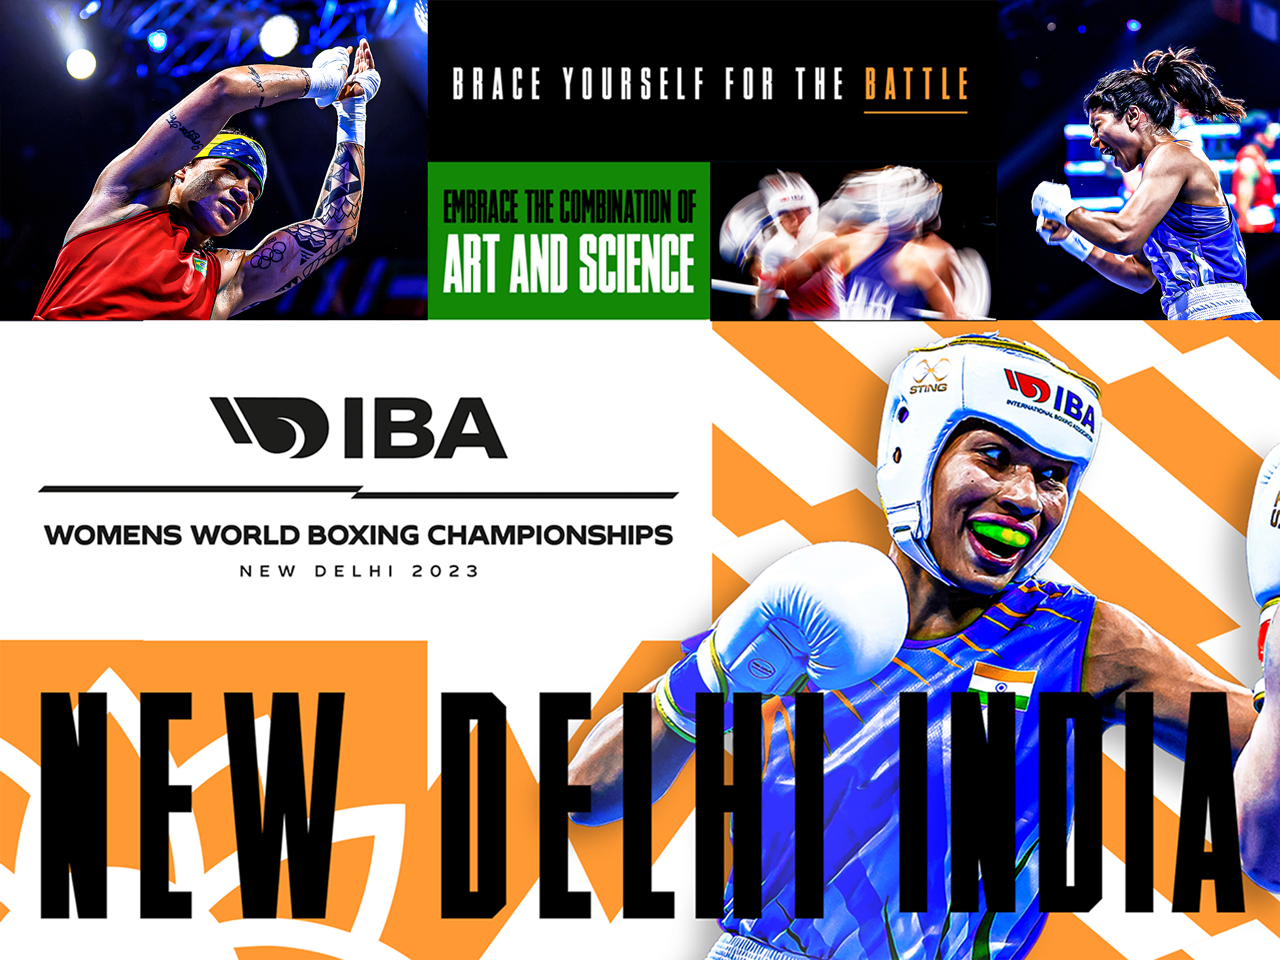 IBA Women’s World Boxing Championships 2023 New Delhi